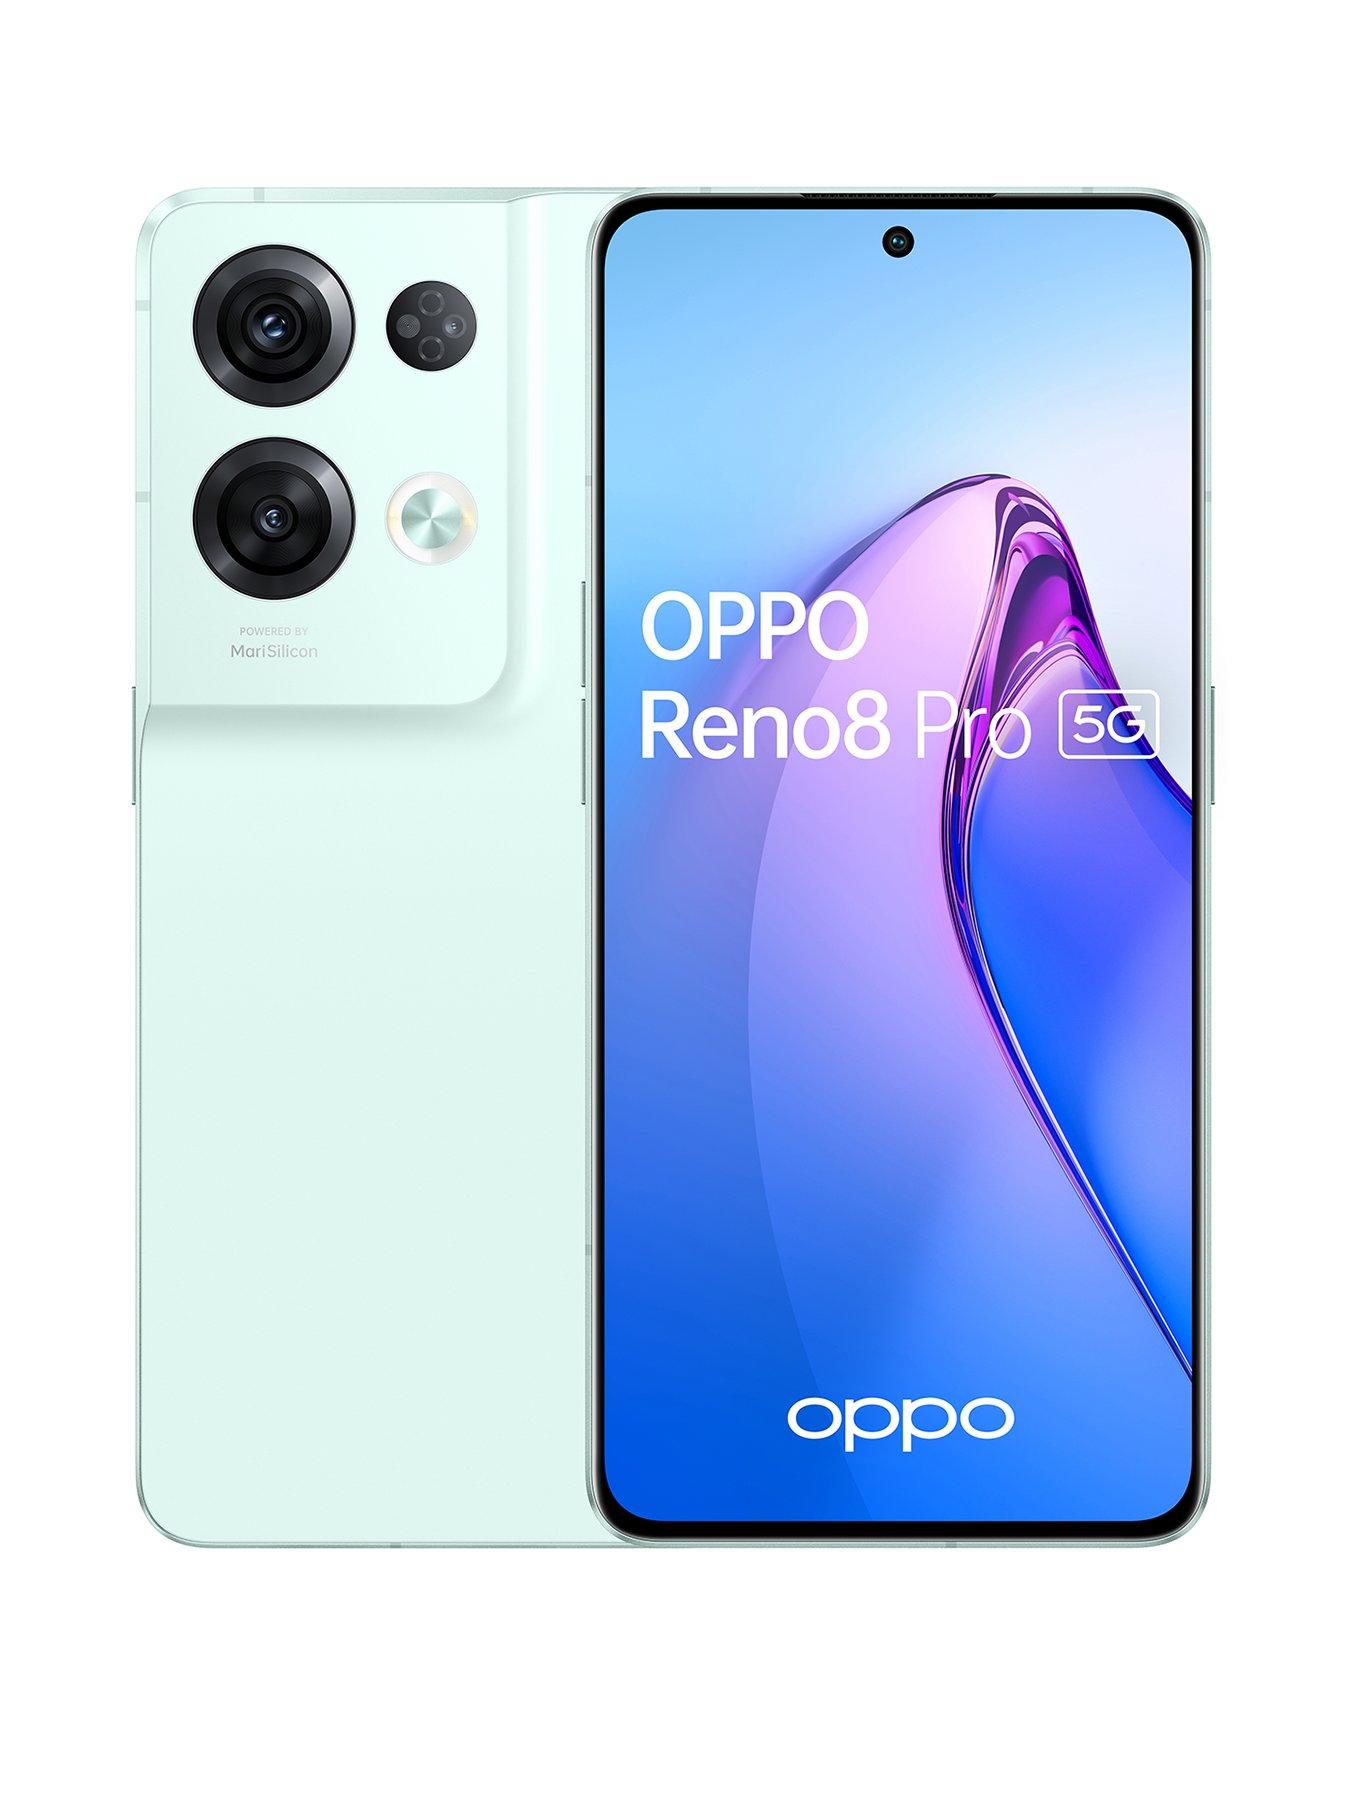 OPPO tells design journey to thinnest, unibody smartphone - Reno8 Pro